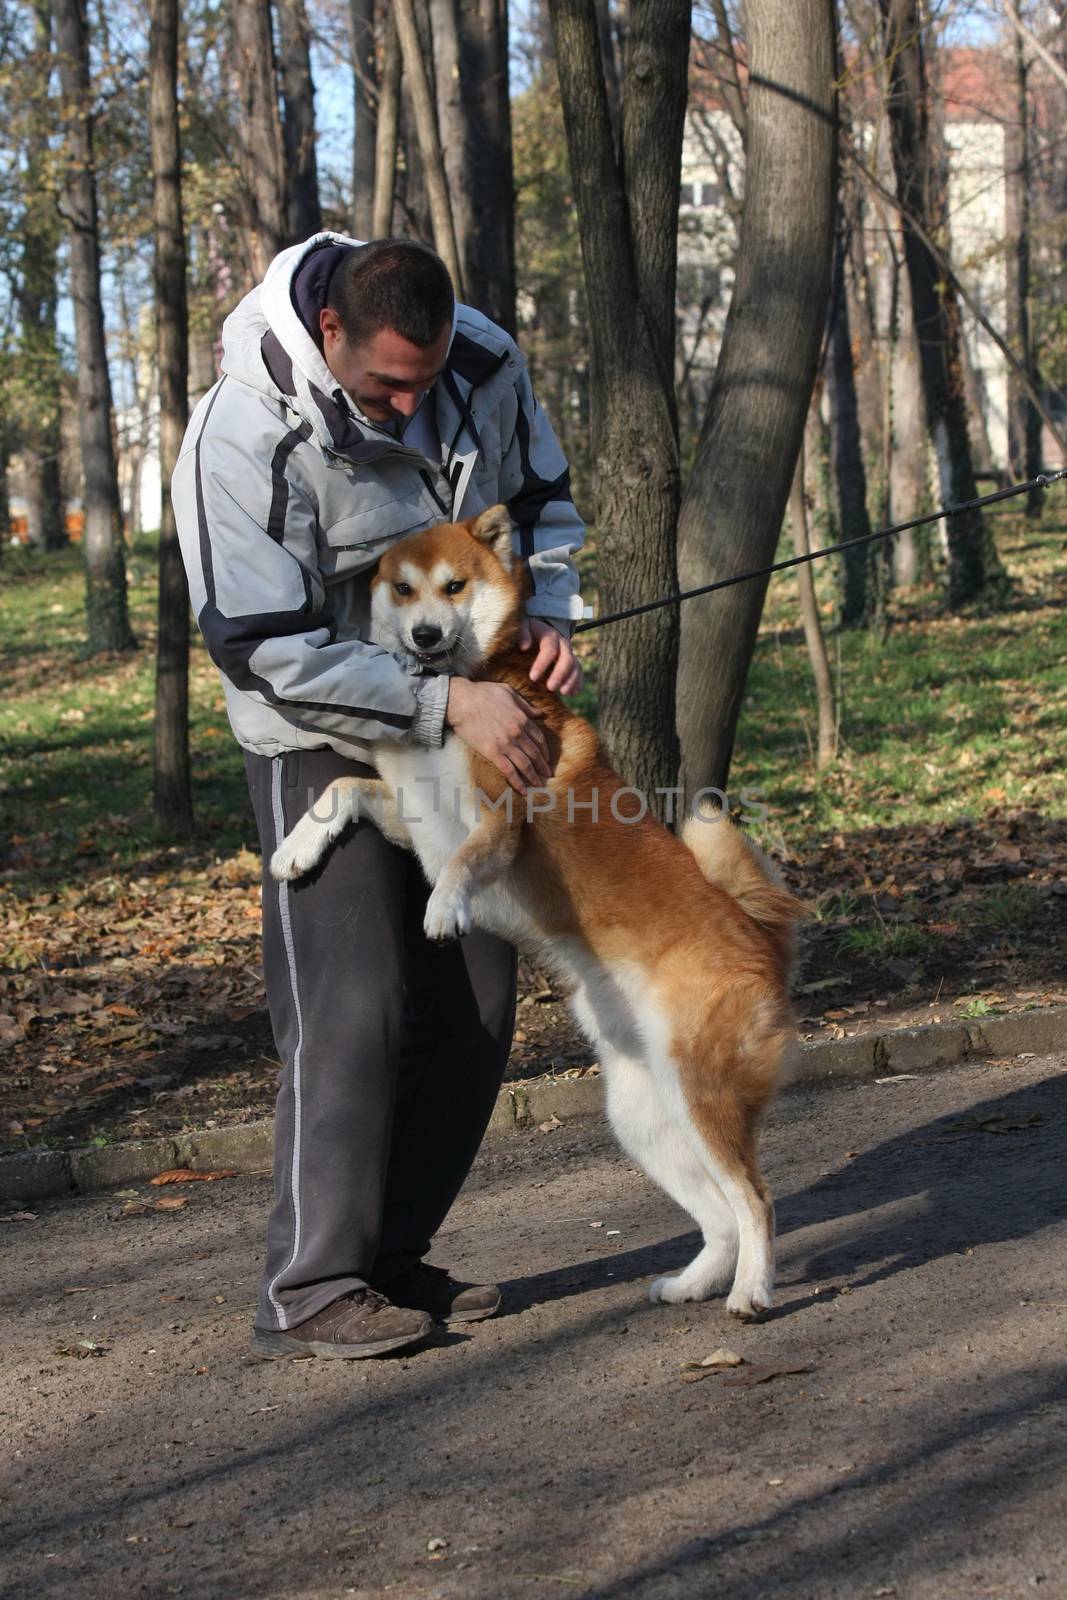 Man and joyful dog in public park by tdjoric